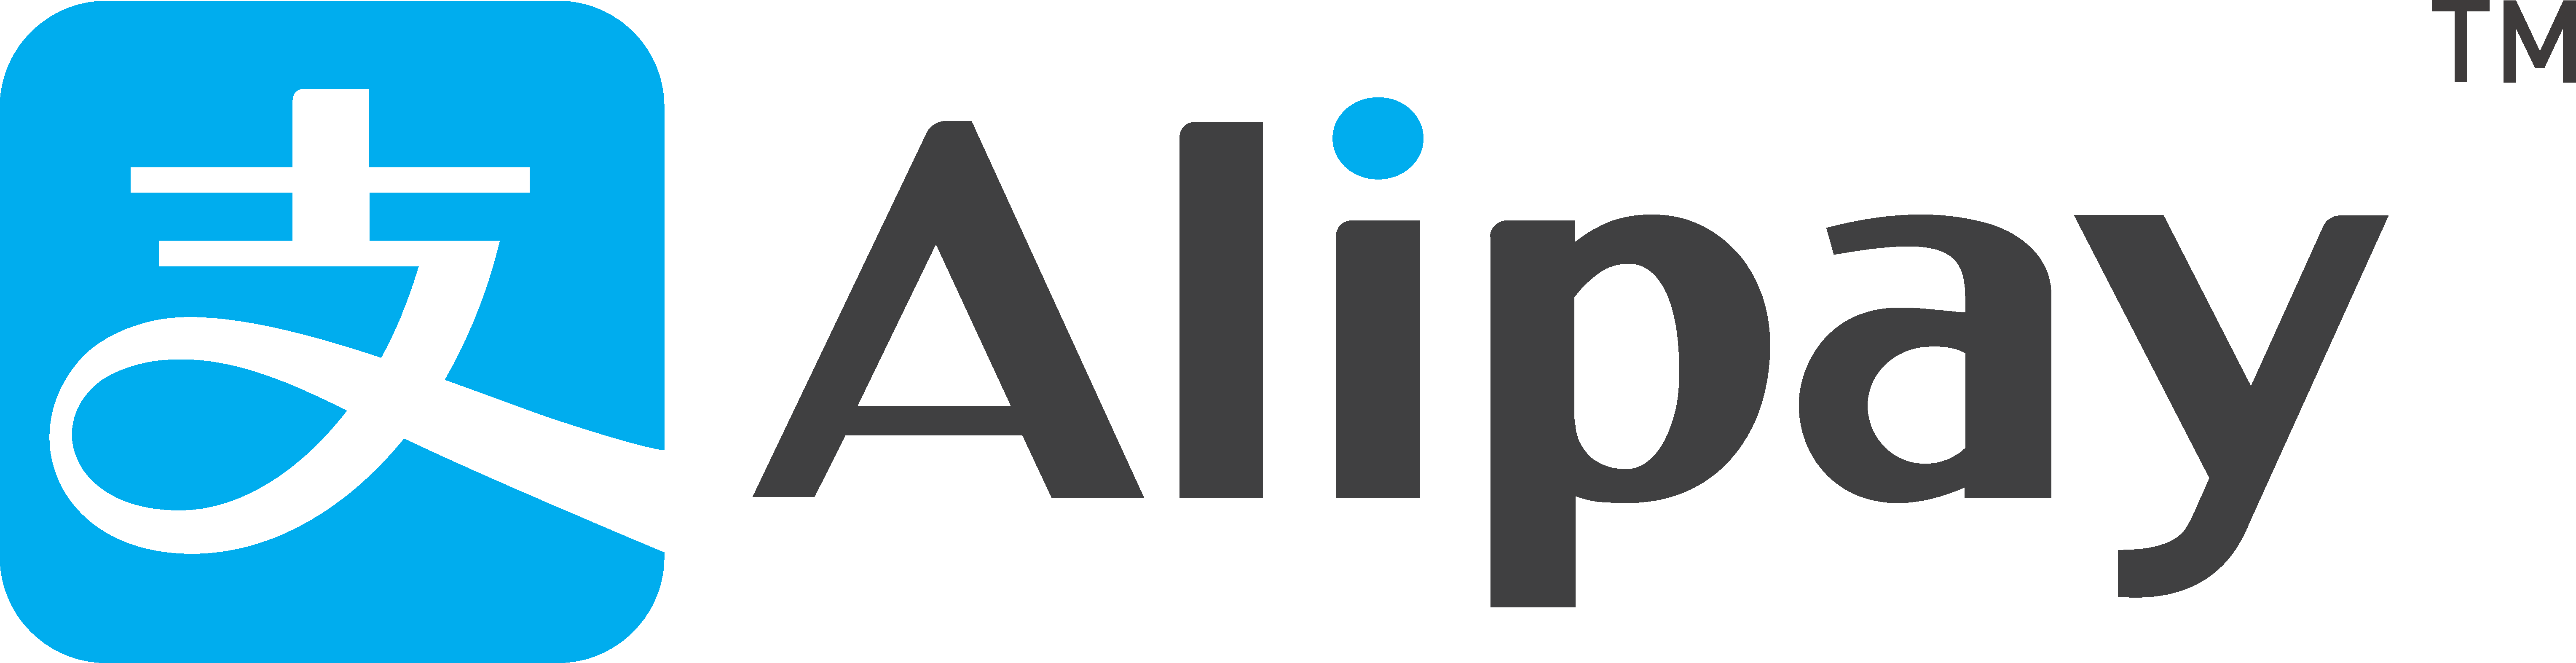 Alipay Logo - Alipay Logo - Free Downloads Graphic Design Materials